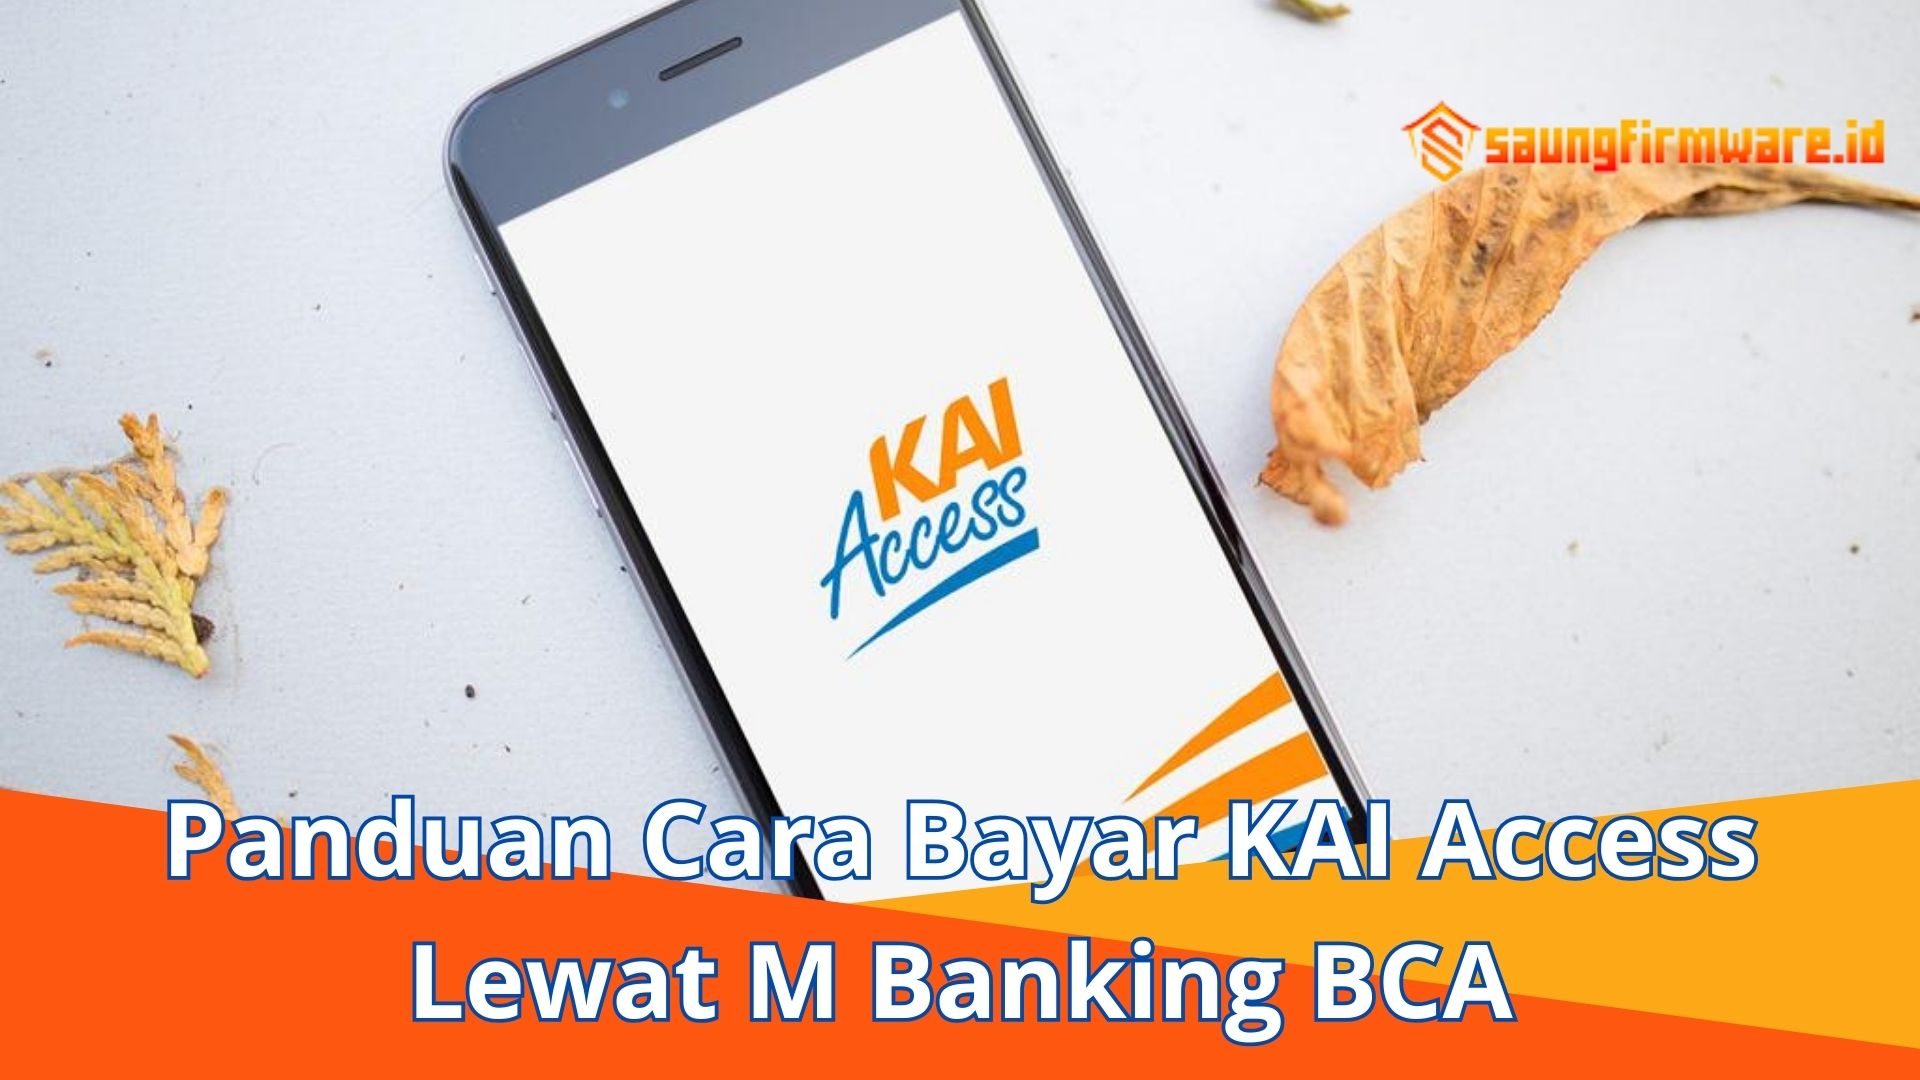 Panduan Cara Bayar KAI Access Lewat M Banking BCA